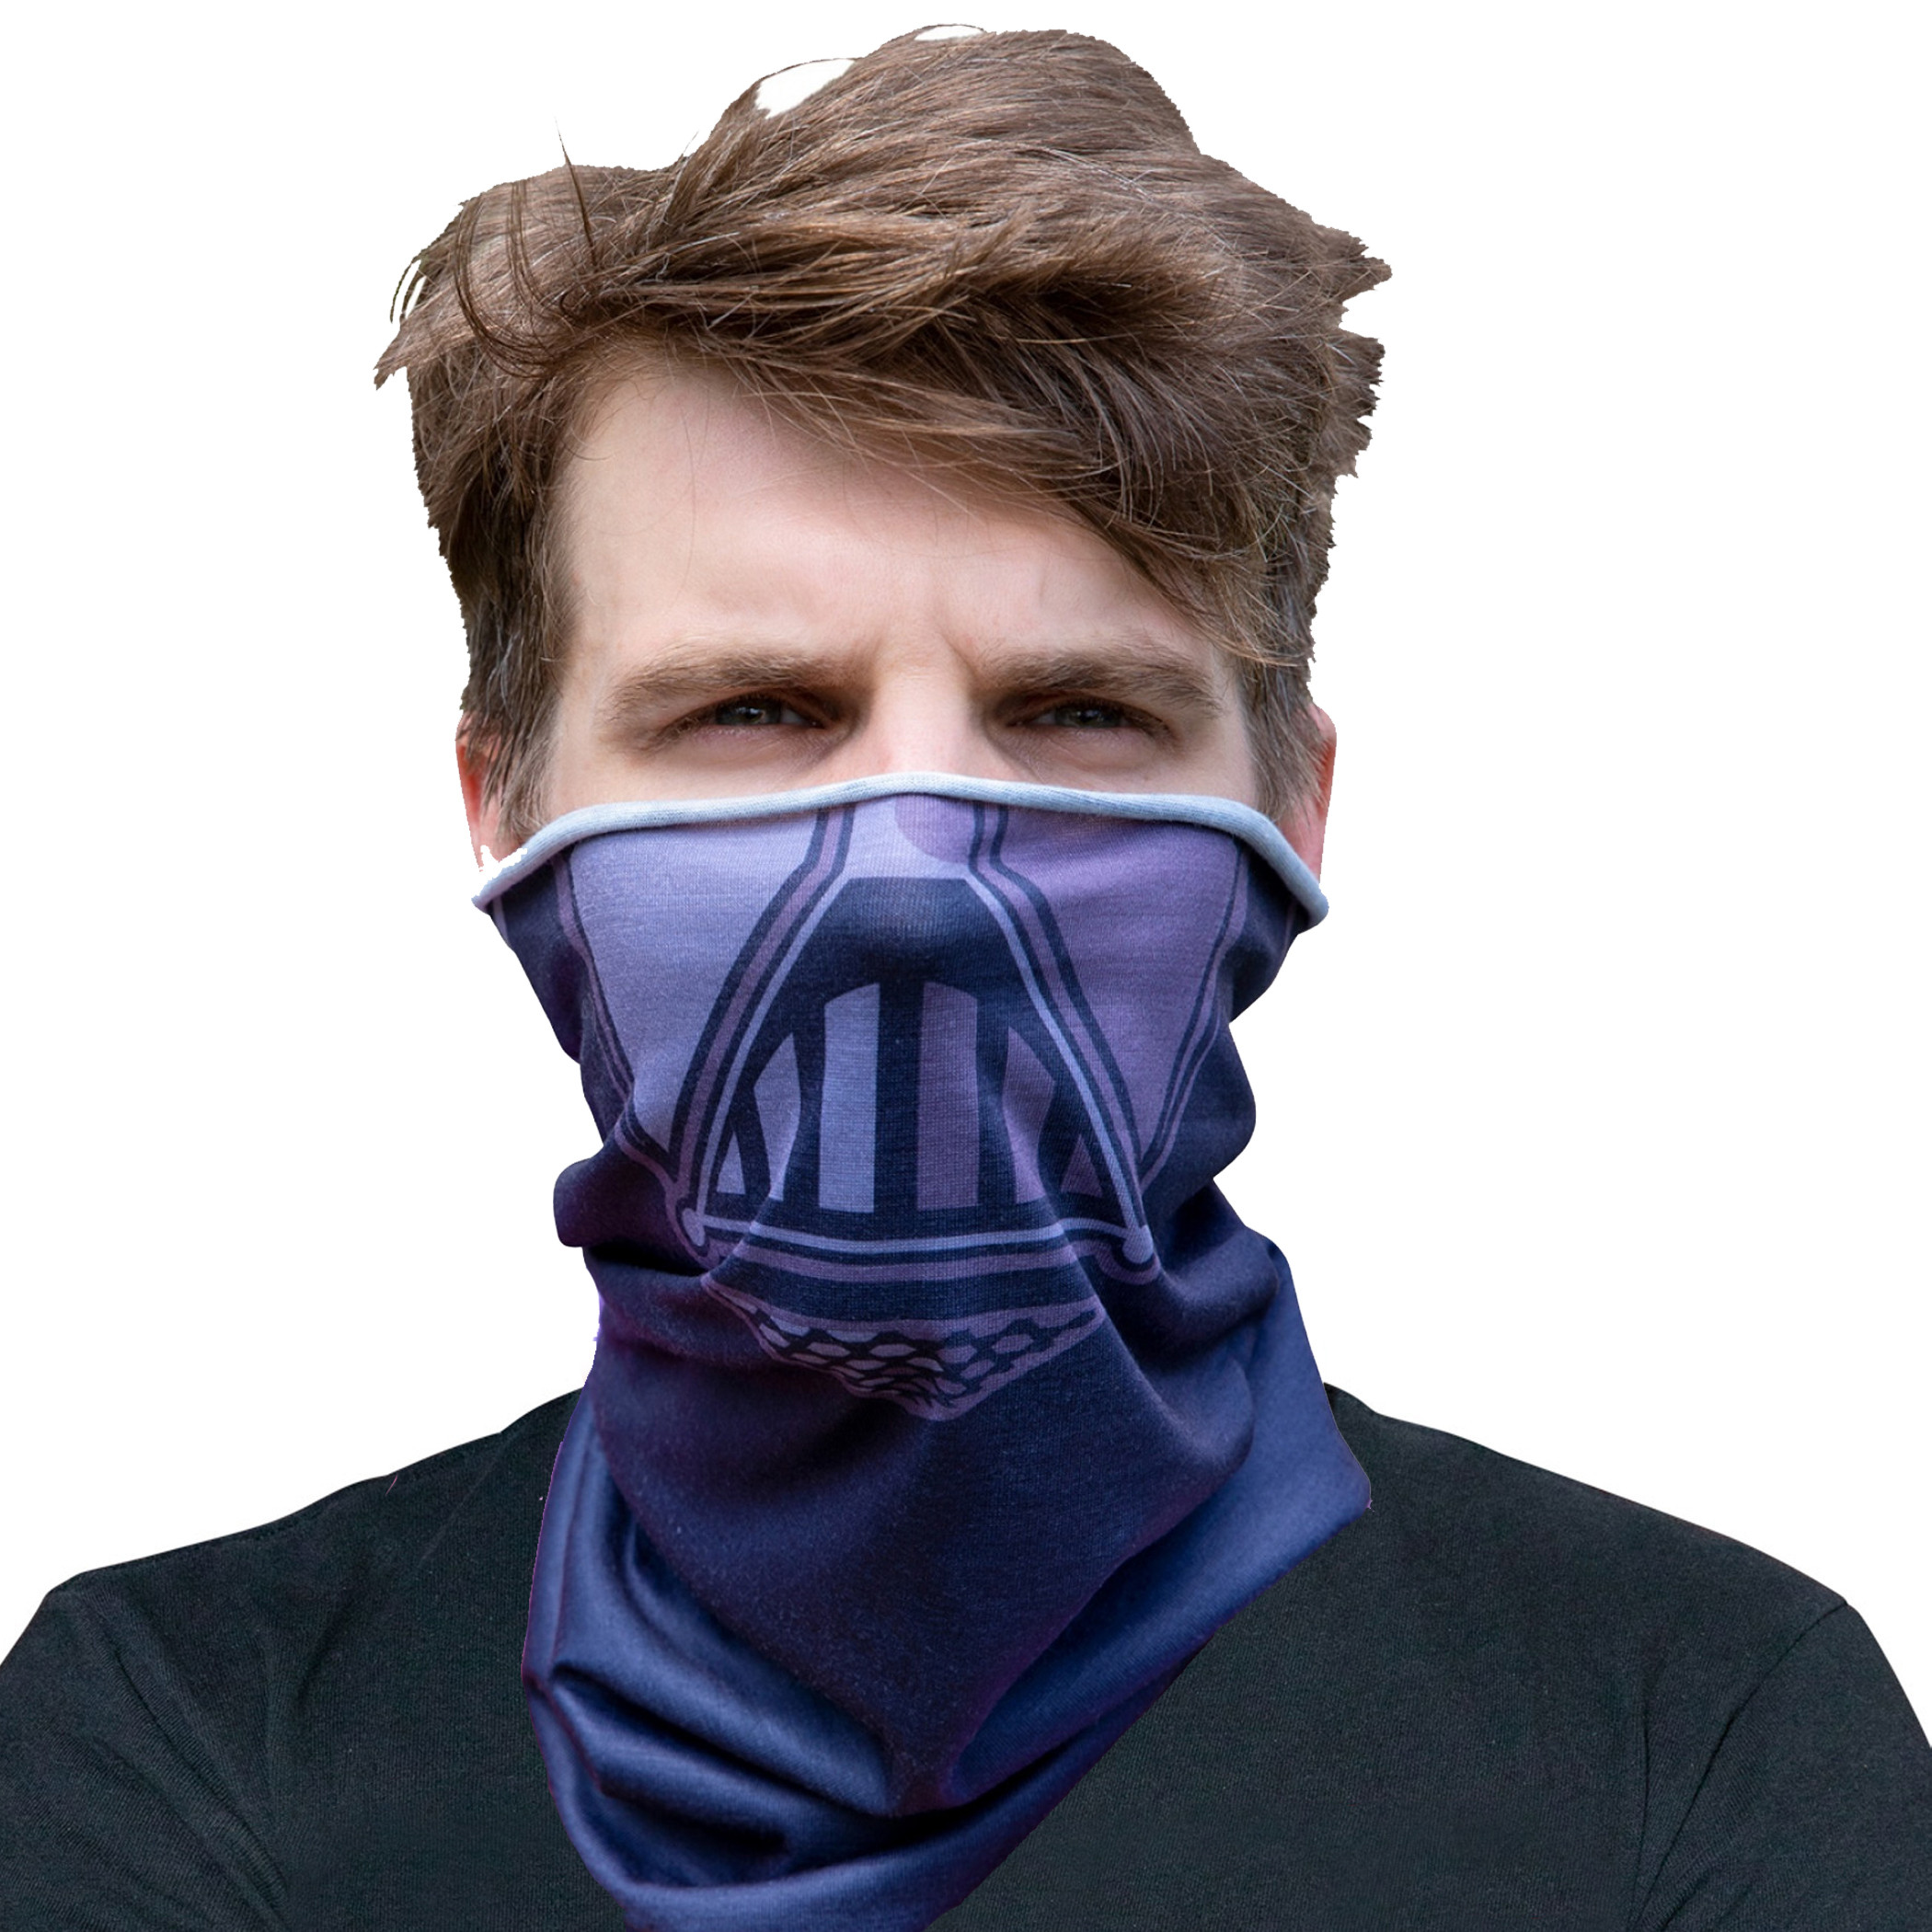 Star Wars Darth Vader Costume Mask Full Face Tubular Bandana Gaiter